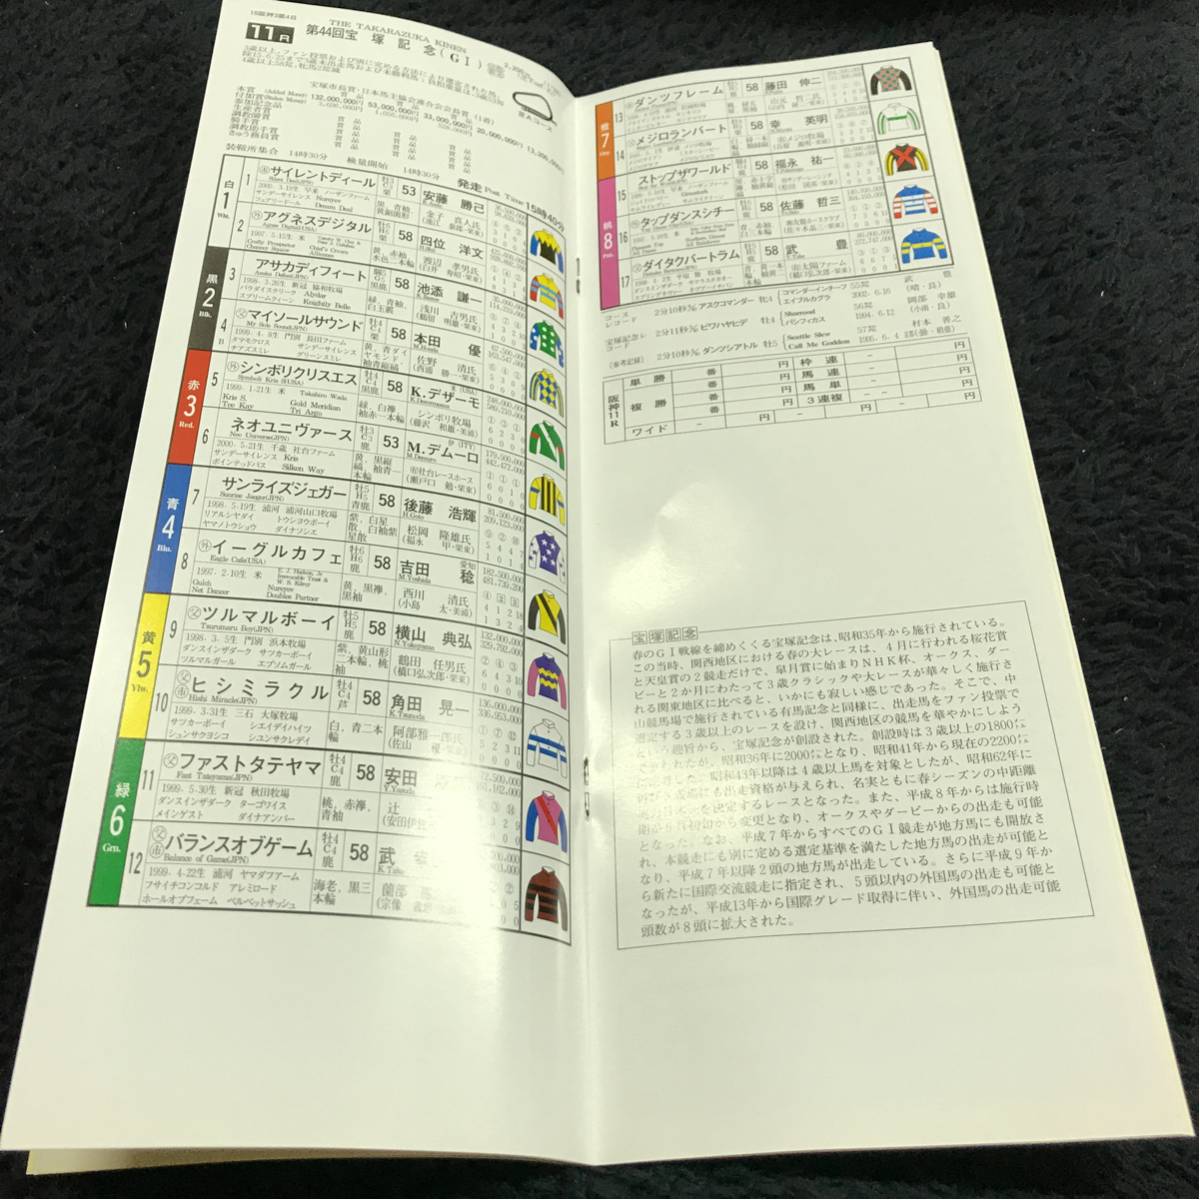 [JRAre- Pro ] no. 44 times Takarazuka memory Racing Program (2003.6.29)| Hanshin horse racing place | cover * Dan tsu frame & wistaria rice field . two * postage 164 jpy 